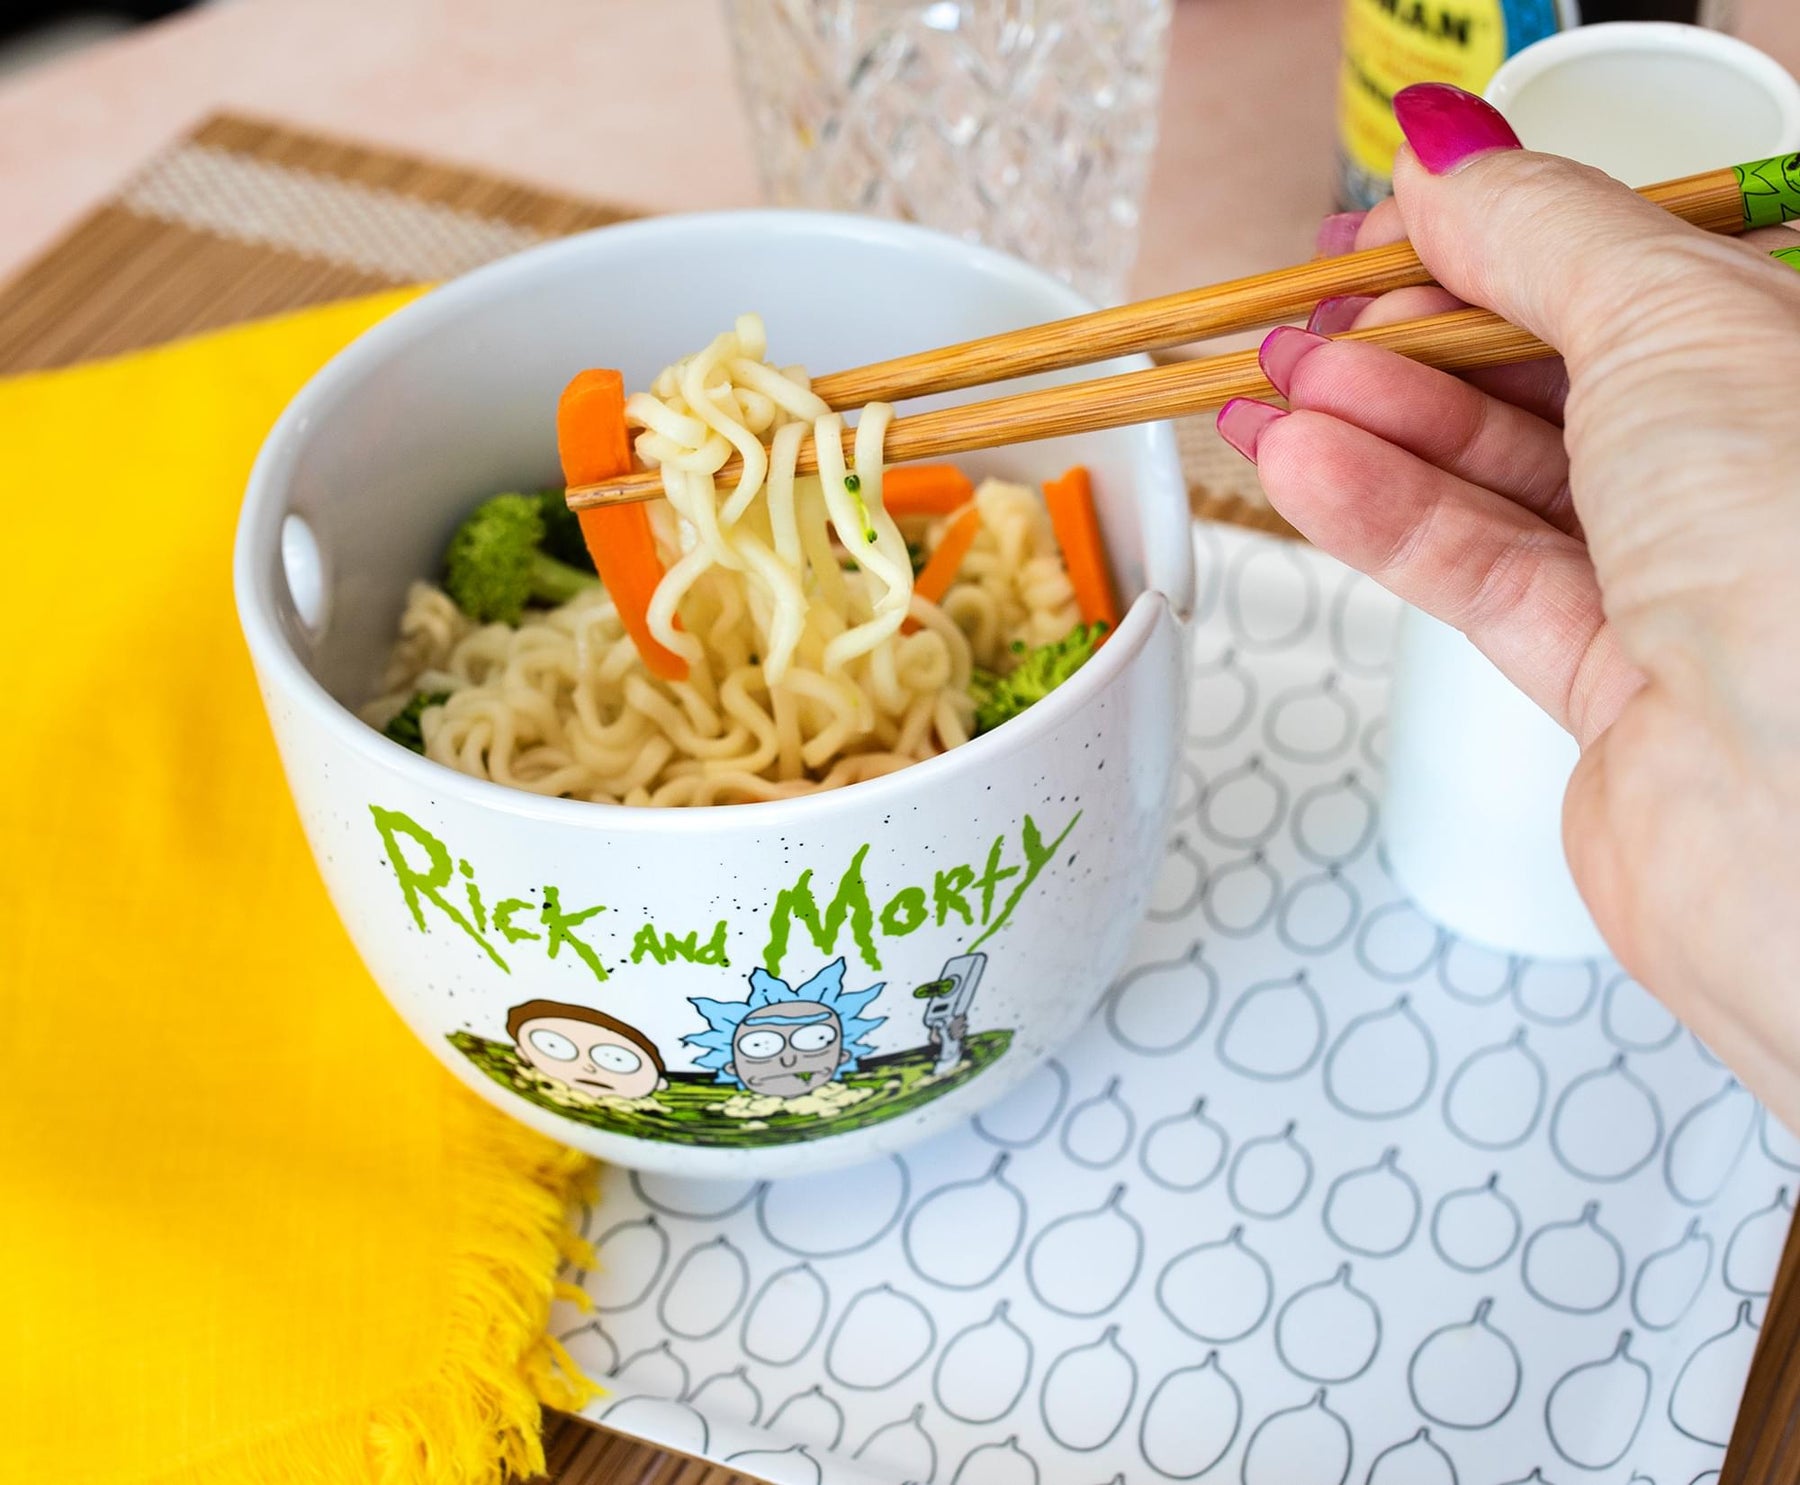 Rick and Morty Portal Japanese Dinnerware Set | 20-Ounce Ramen Bowl, Chopsticks